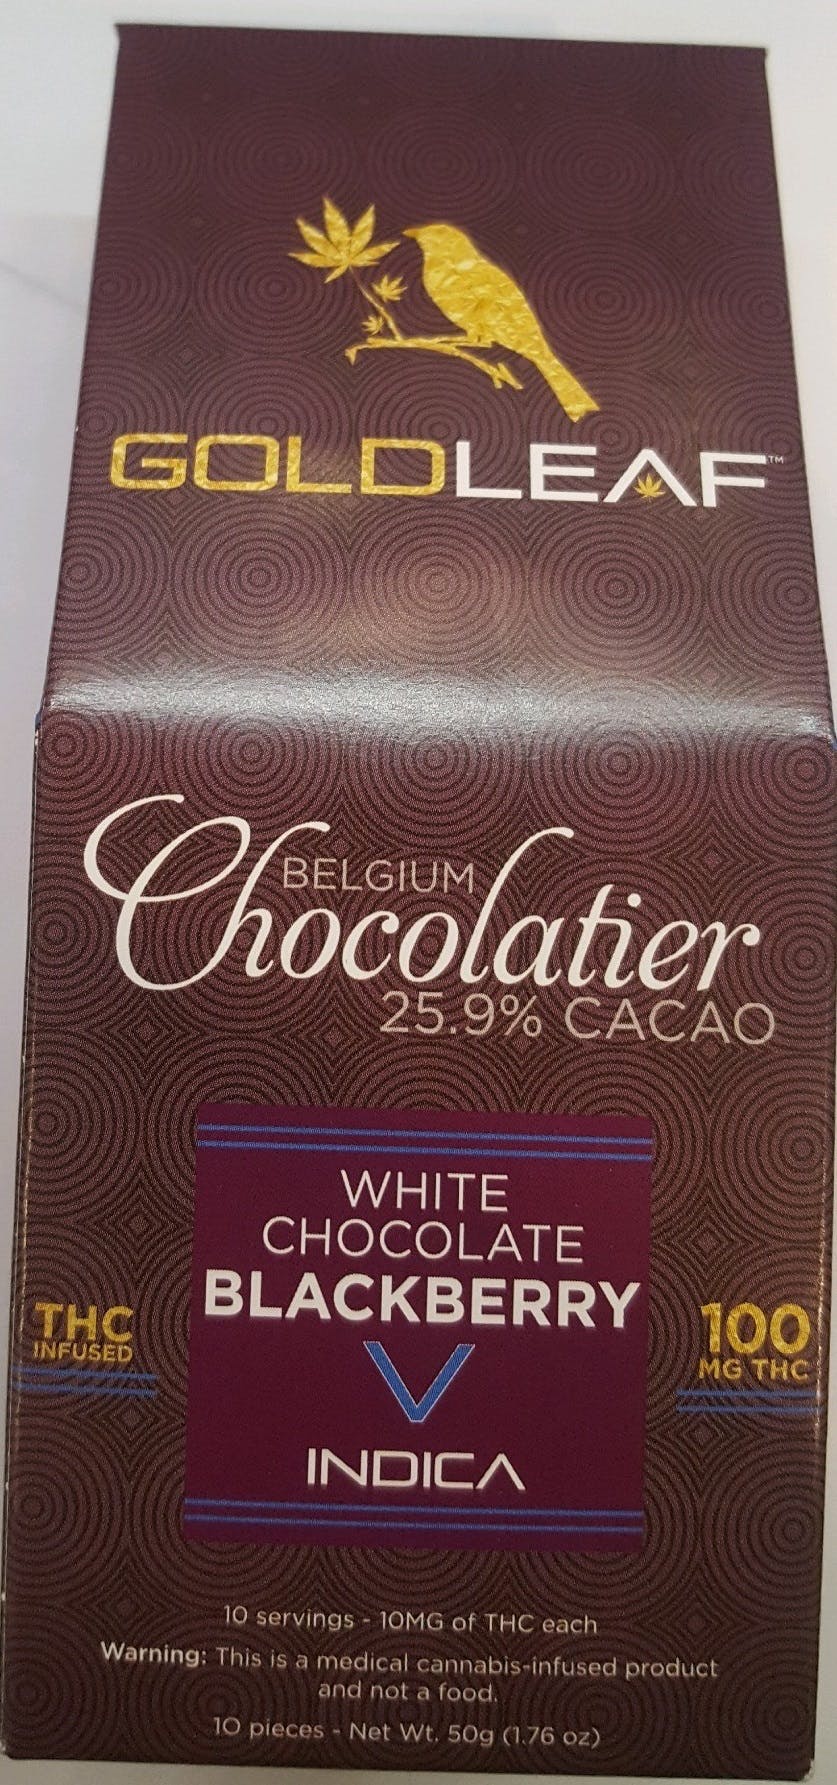 edible-100mg-goldleaf-white-chocolate-blackberry